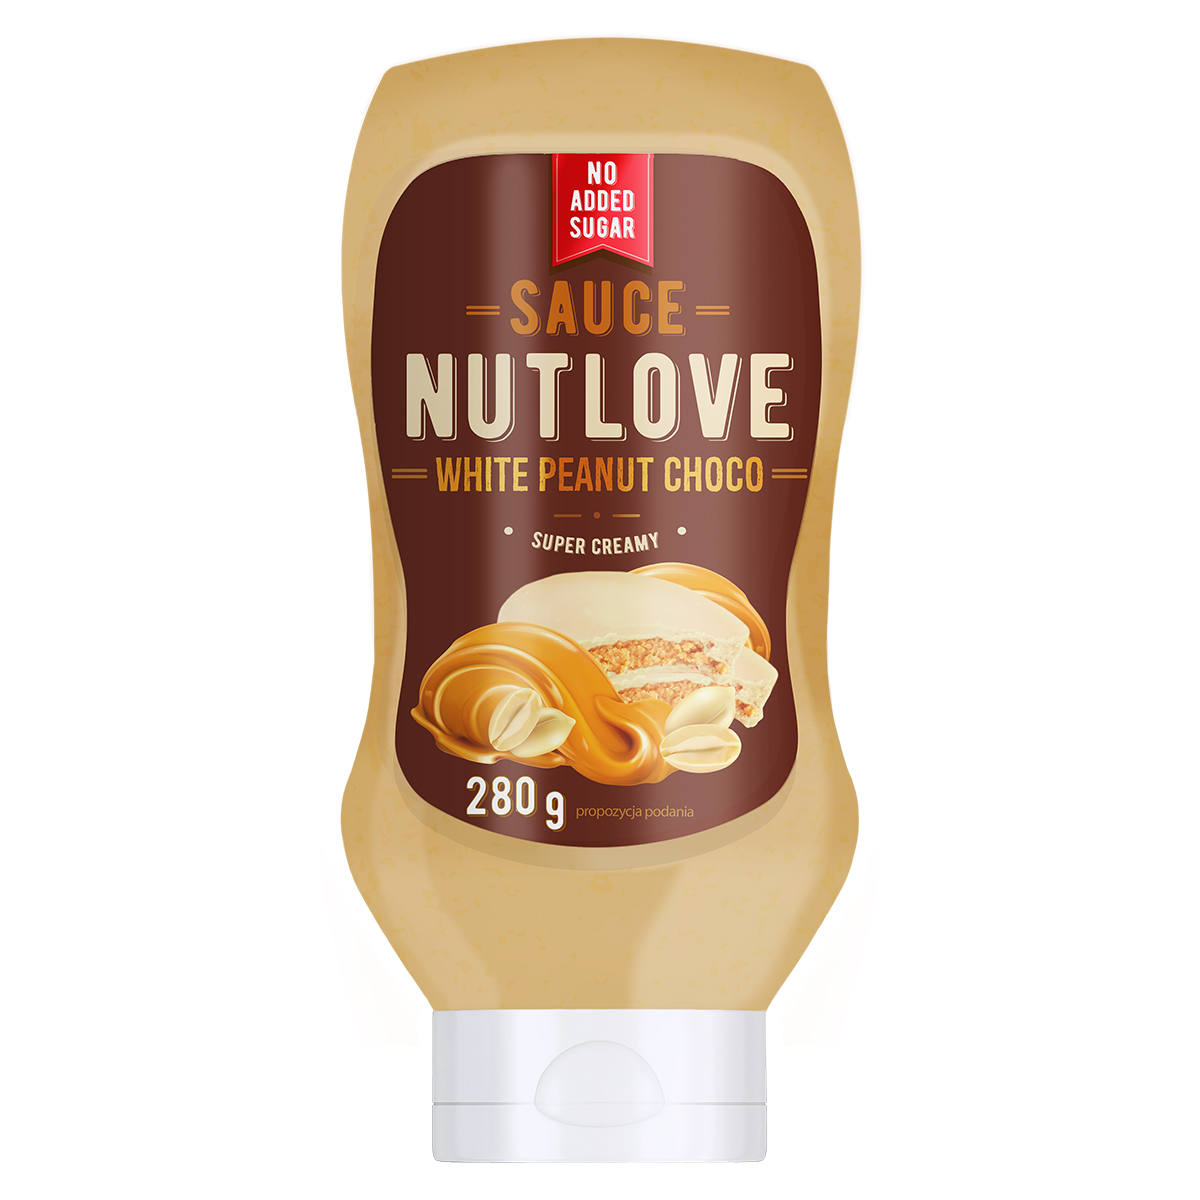 nutlove white peanut choco